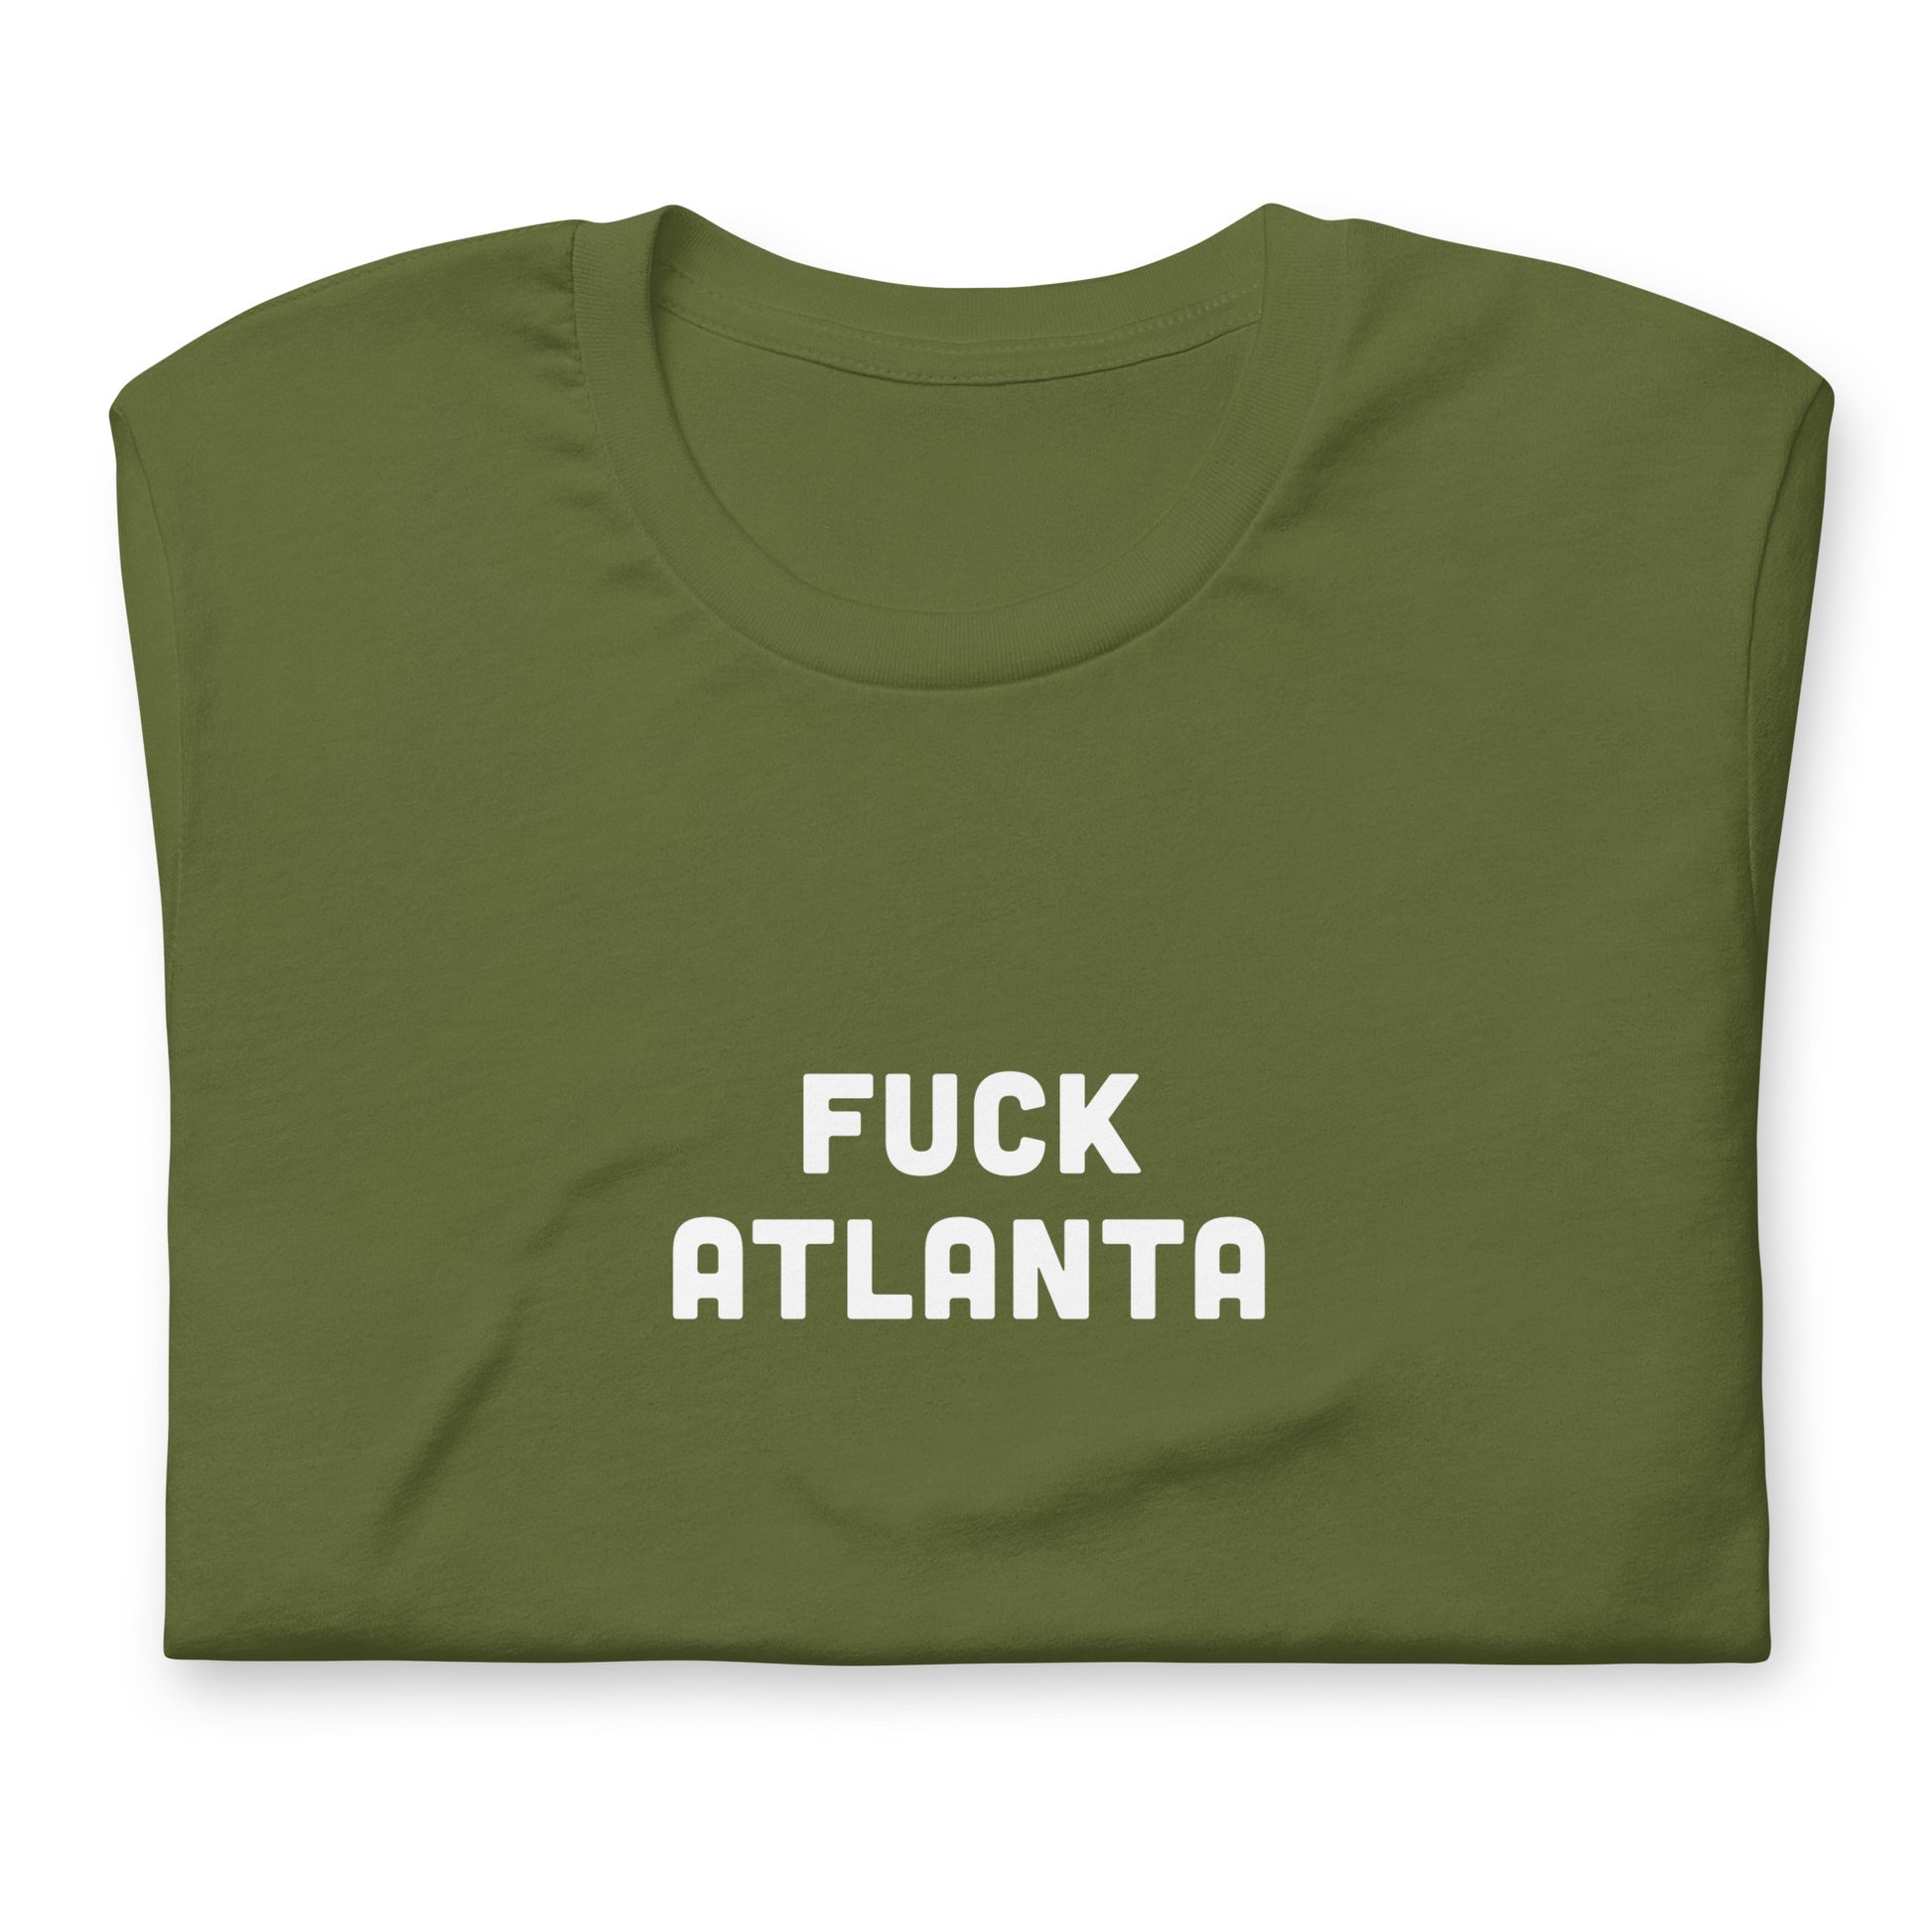 Fuck Atlanta T-Shirt Size XL Color Navy